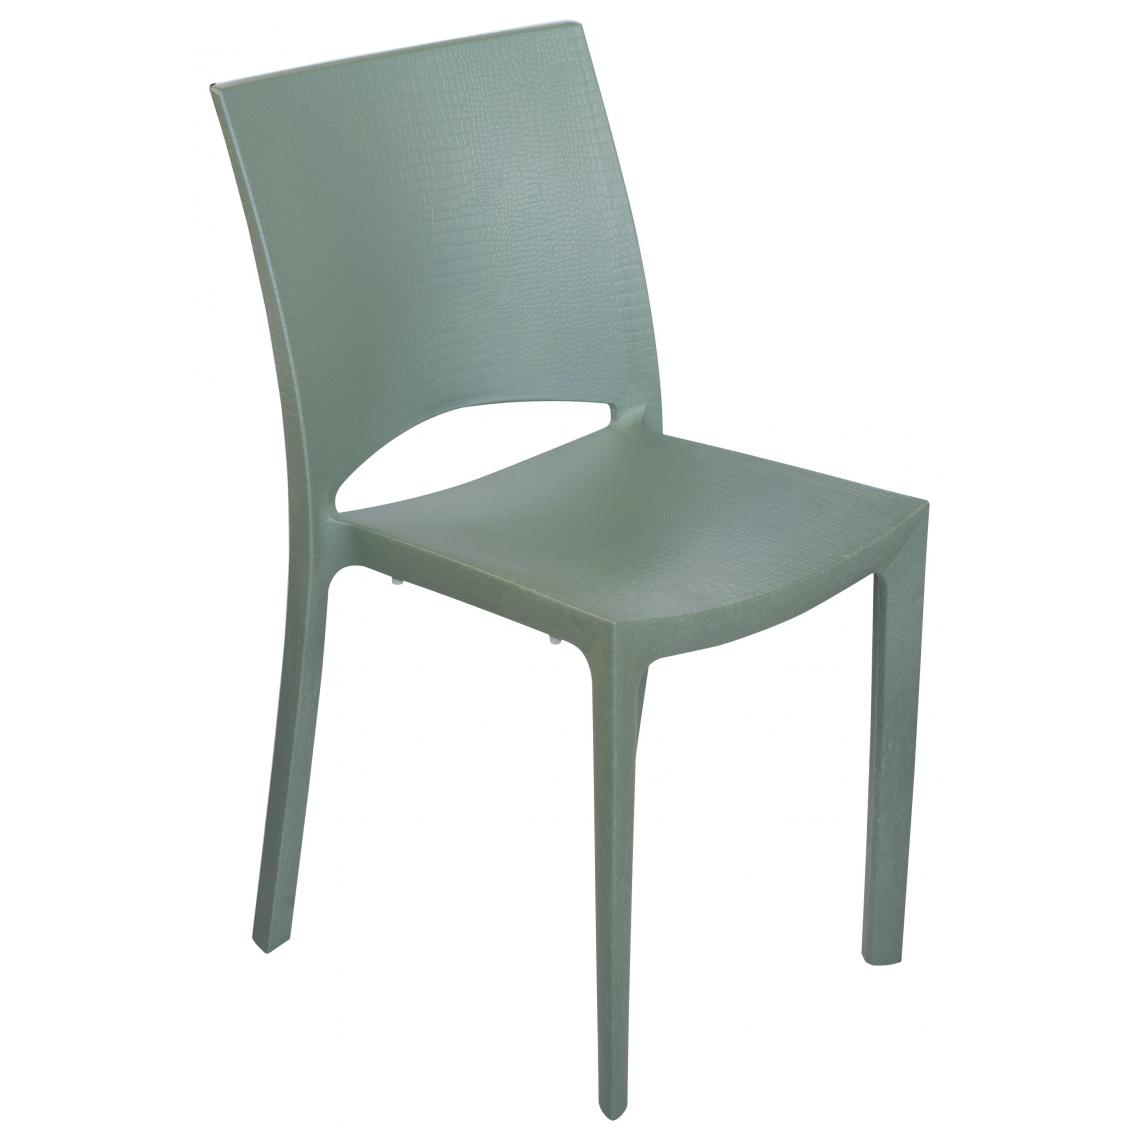 3S. x Home - Chaise Design Verte Effet Croco ARLEQUIN - Chaises